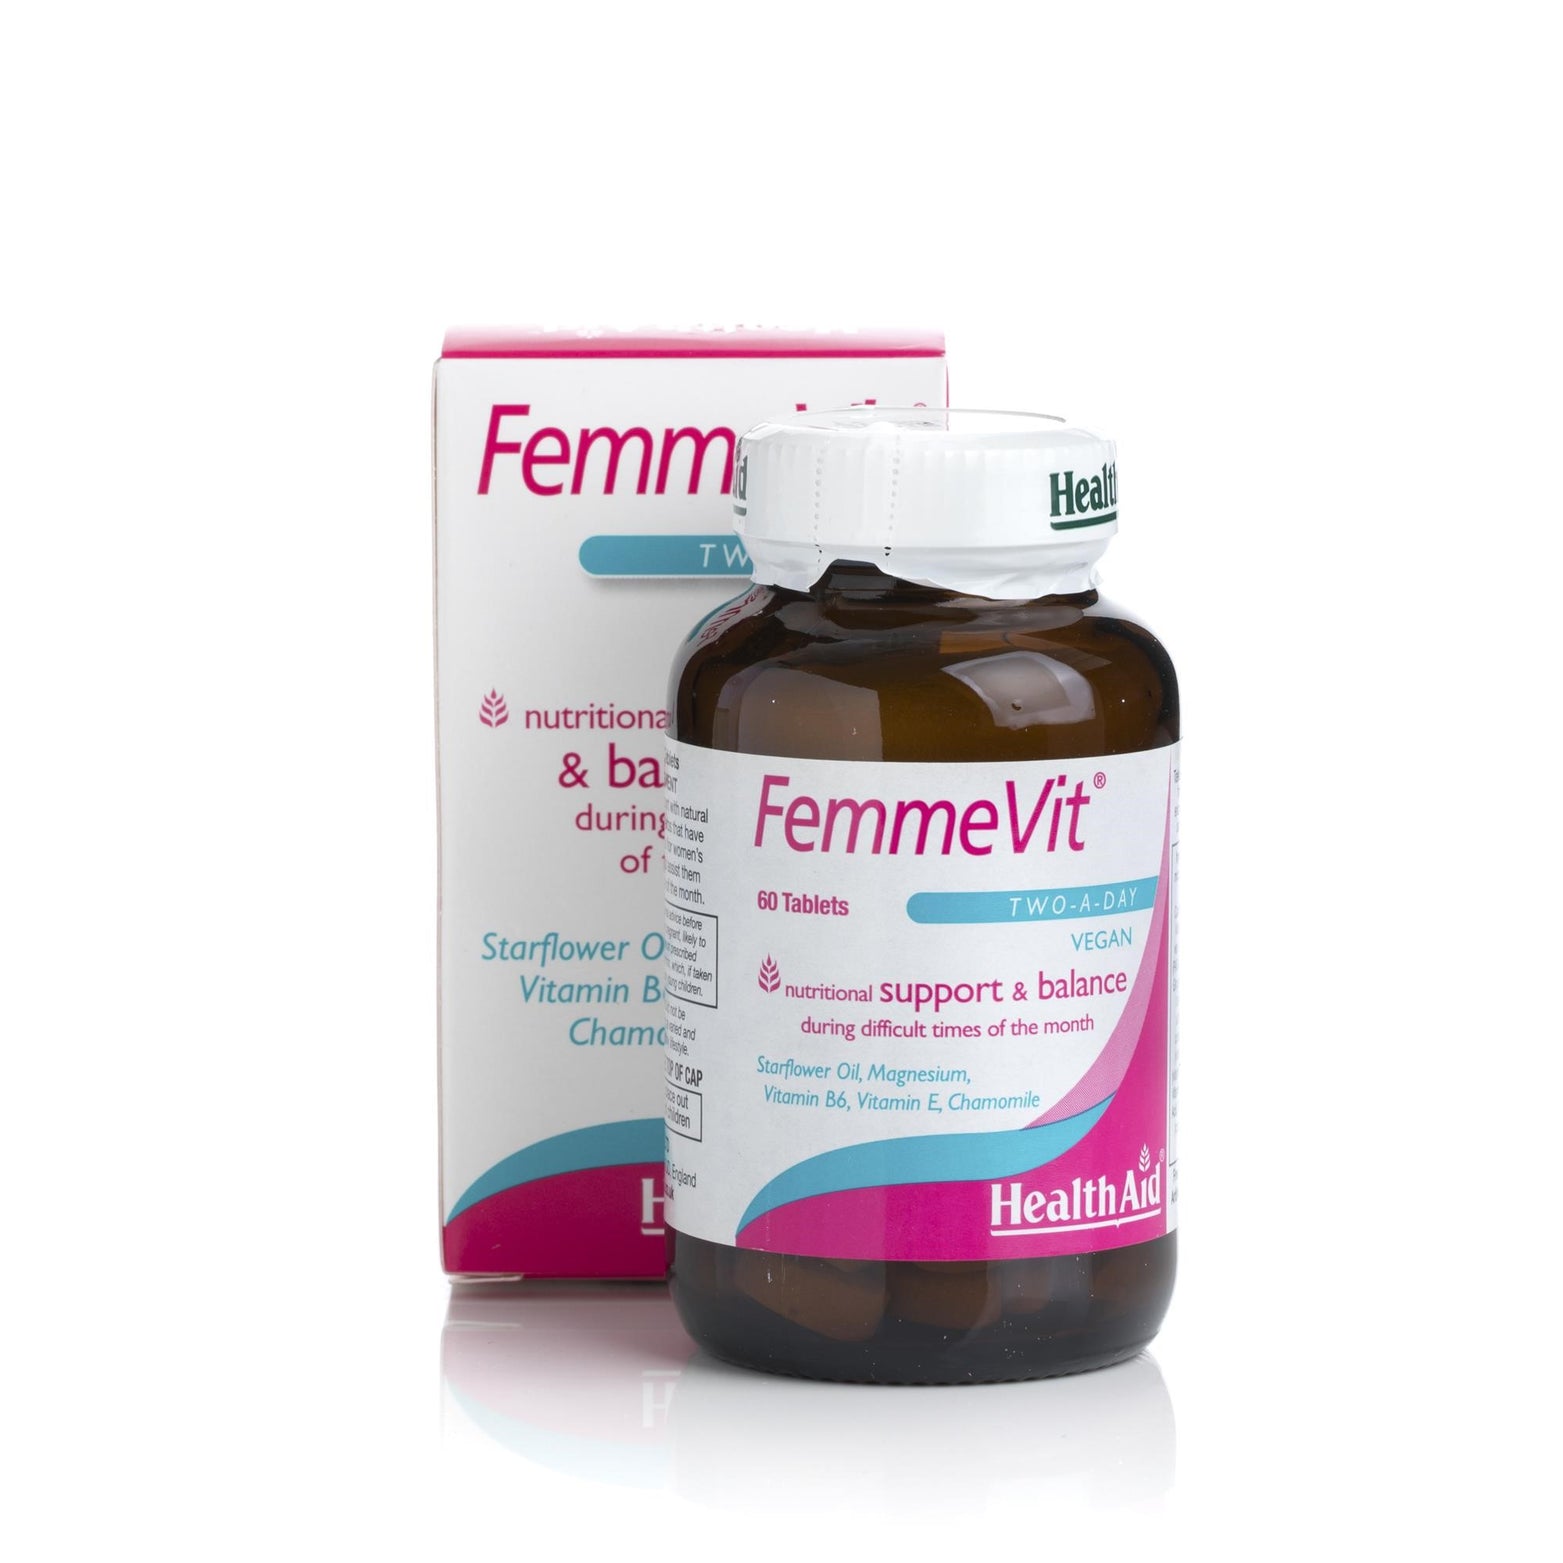 HEALTH AID FEMMEVIT PMS 60STAB - Med7 Online